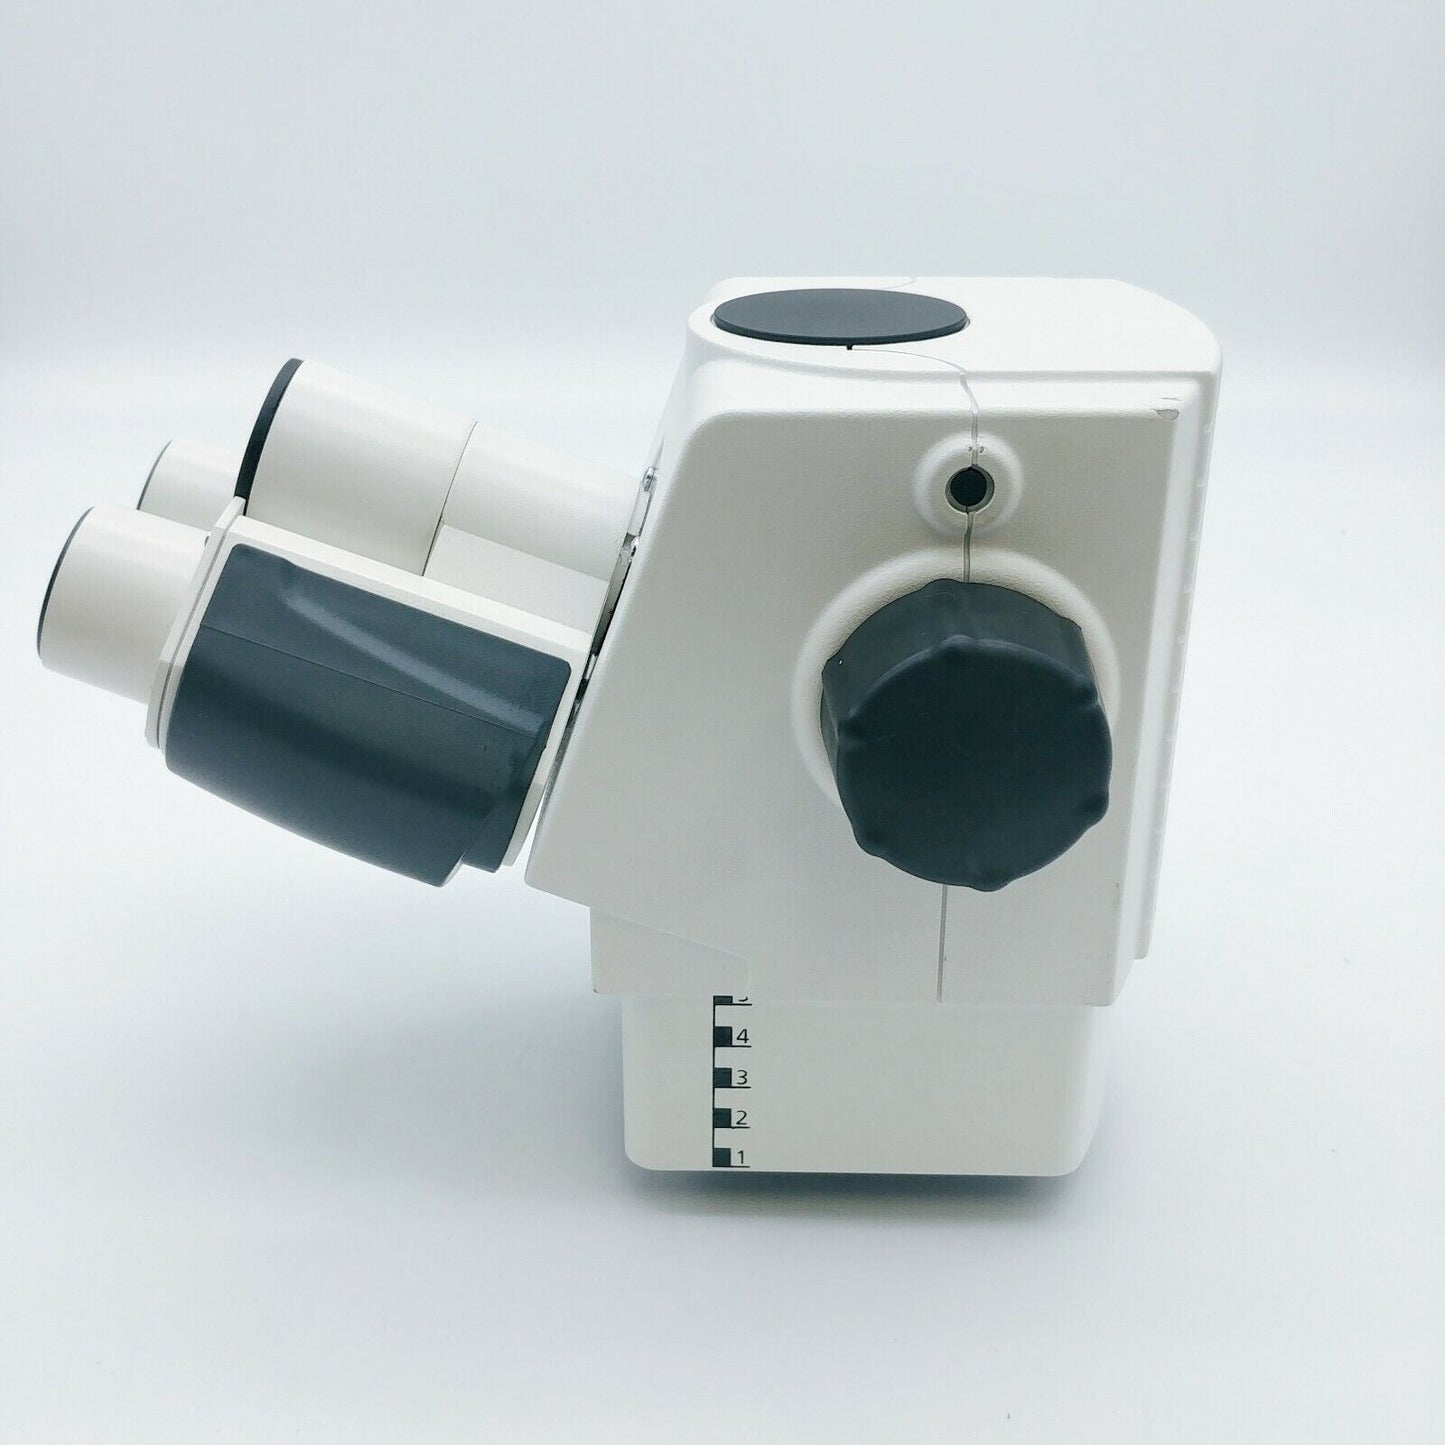 Zeiss Microscope Binocular Ergotube Head 425511 with Vertical Adjustment - microscopemarketplace